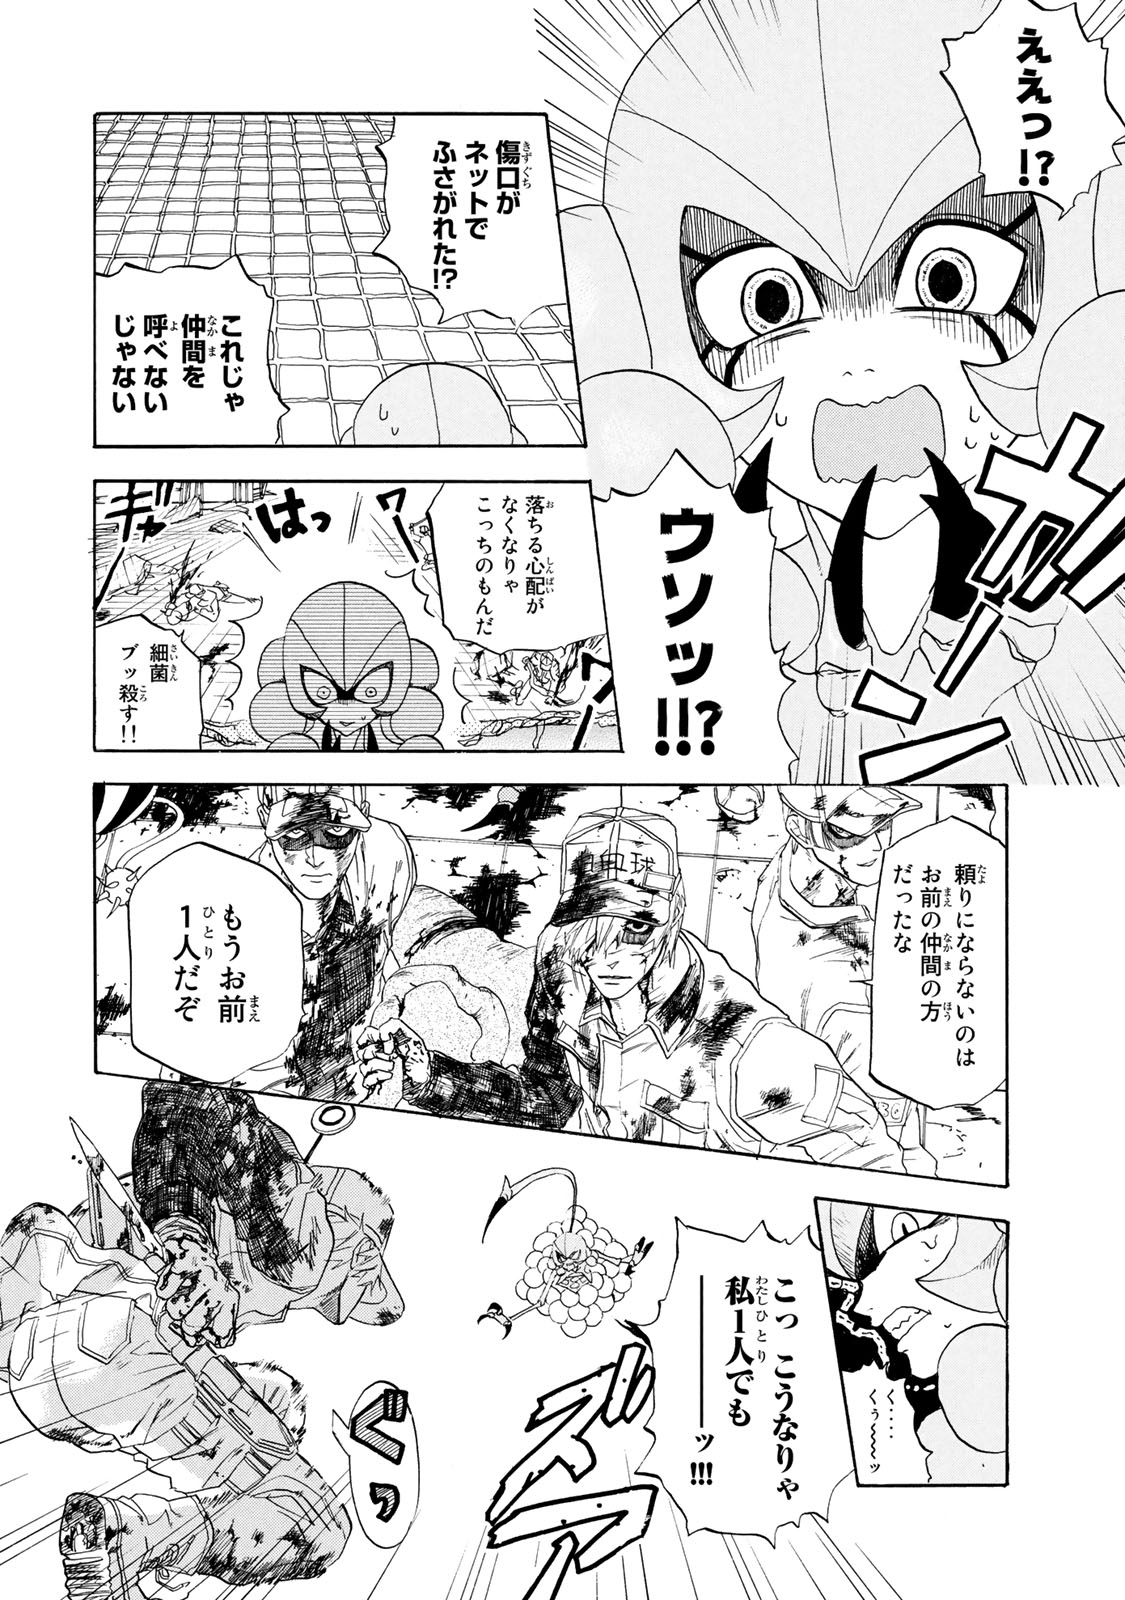 Hataraku Saibou - Chapter 4 - Page 30